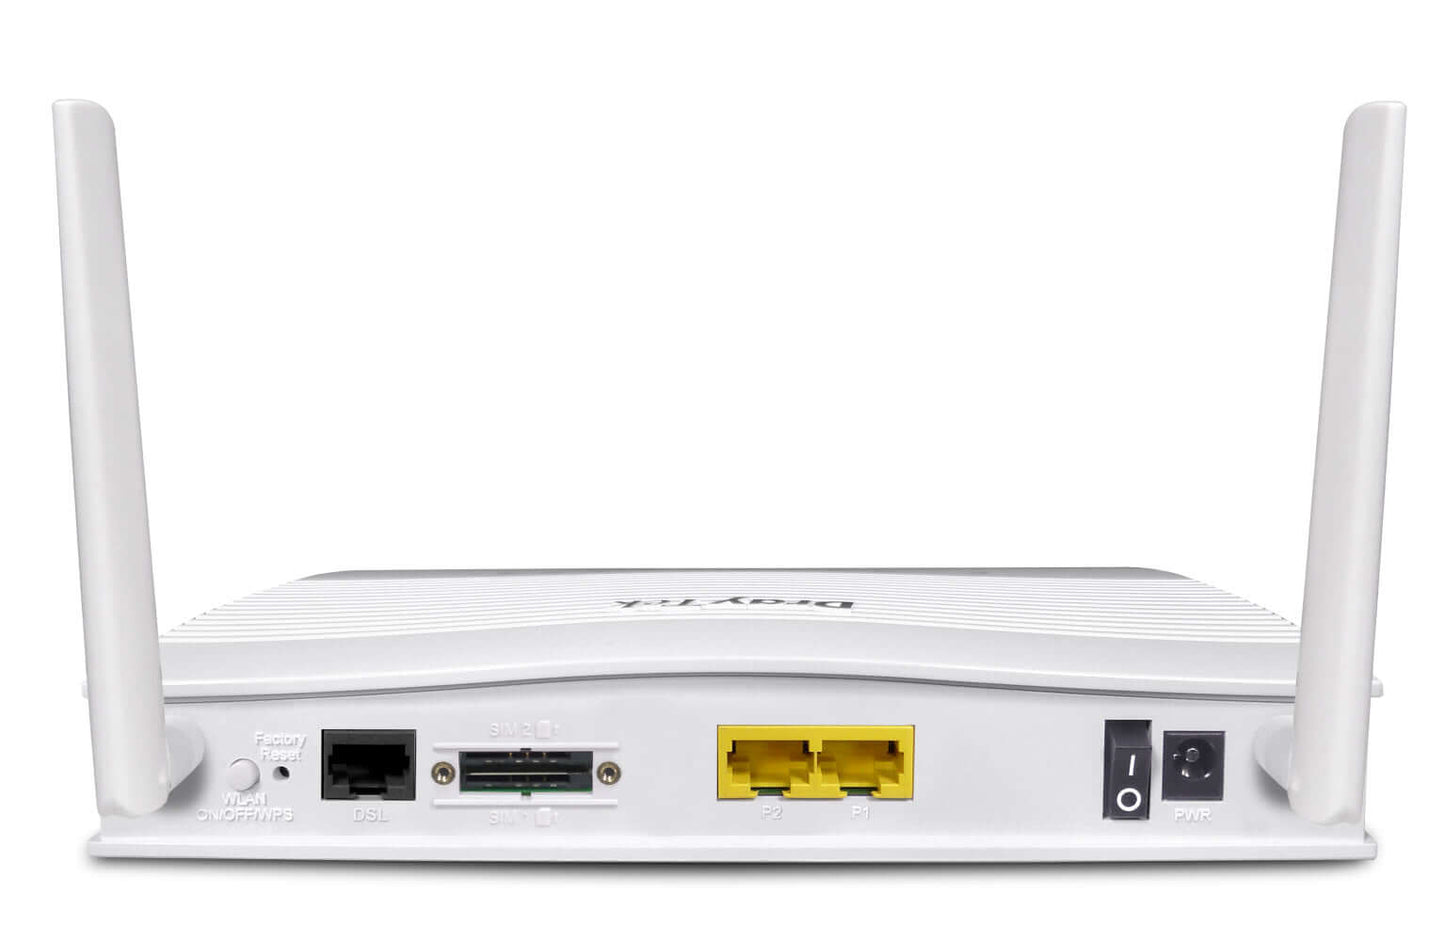 draytek vigor 2620 router 4G LTE VDSL2/ADSL2+ modem with 2 embedded SIM Rear Port View No Description